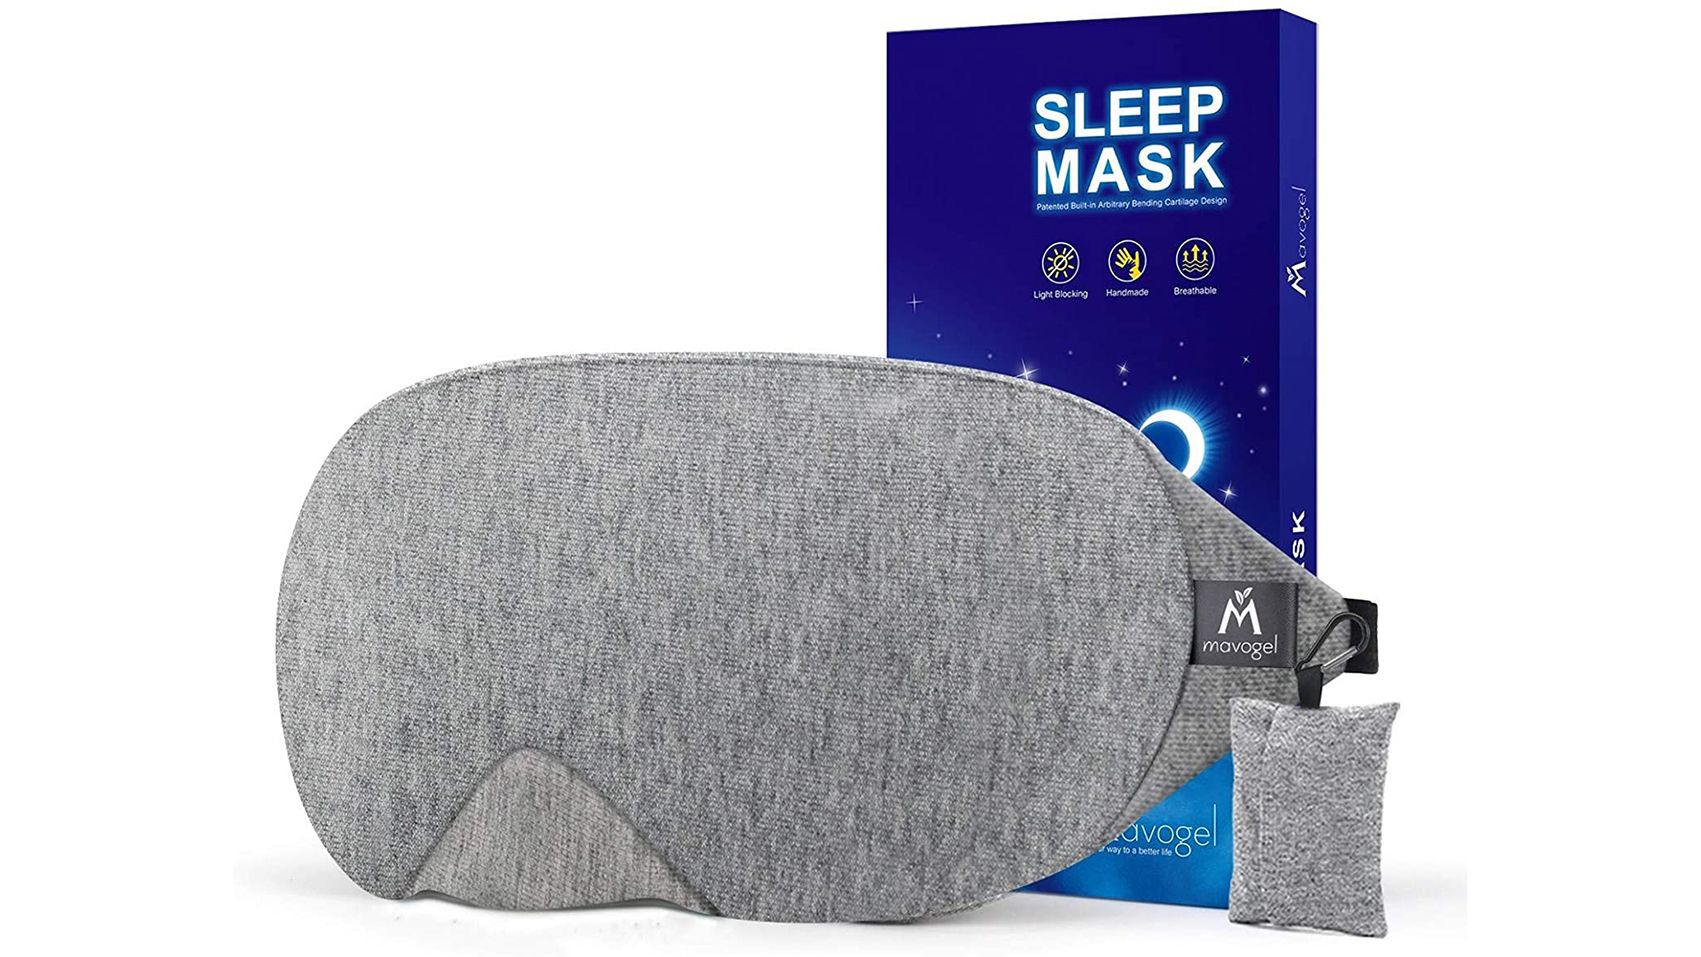 enVy COPPER™ Silk Sleep Mask 